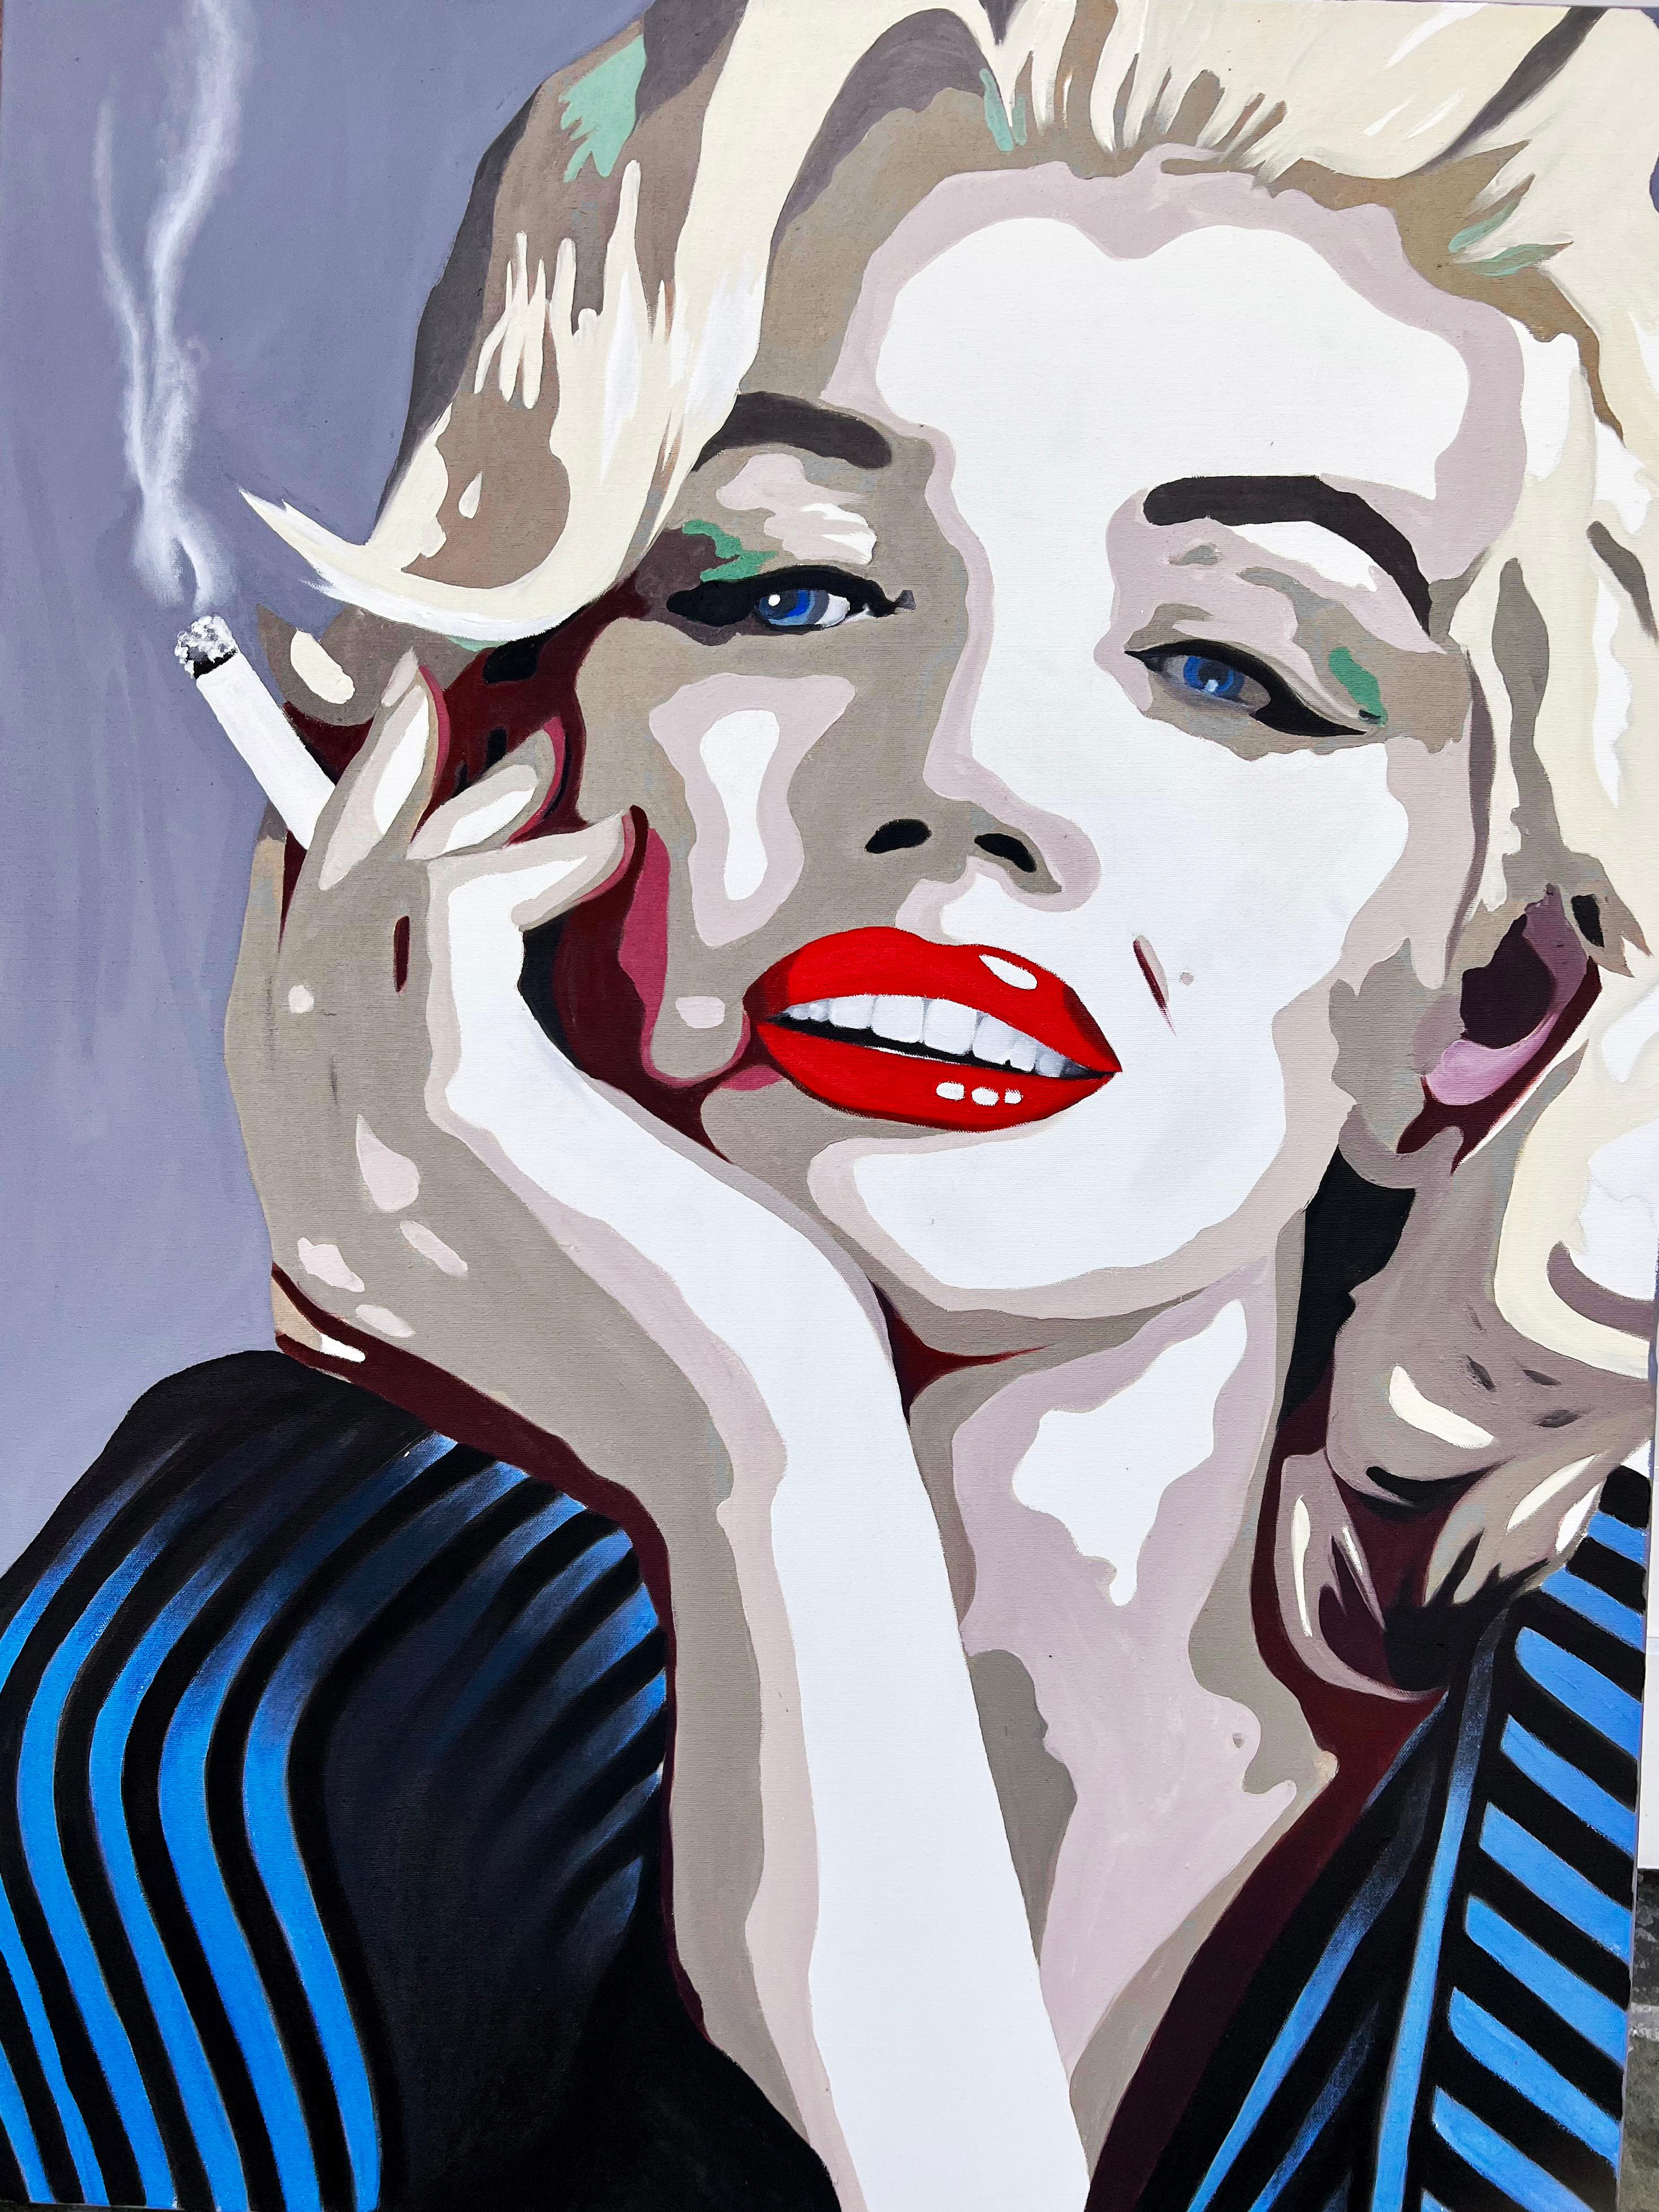 Monroe 7. Celebrity blue pop-art portrait of iconic Marylin Monroe